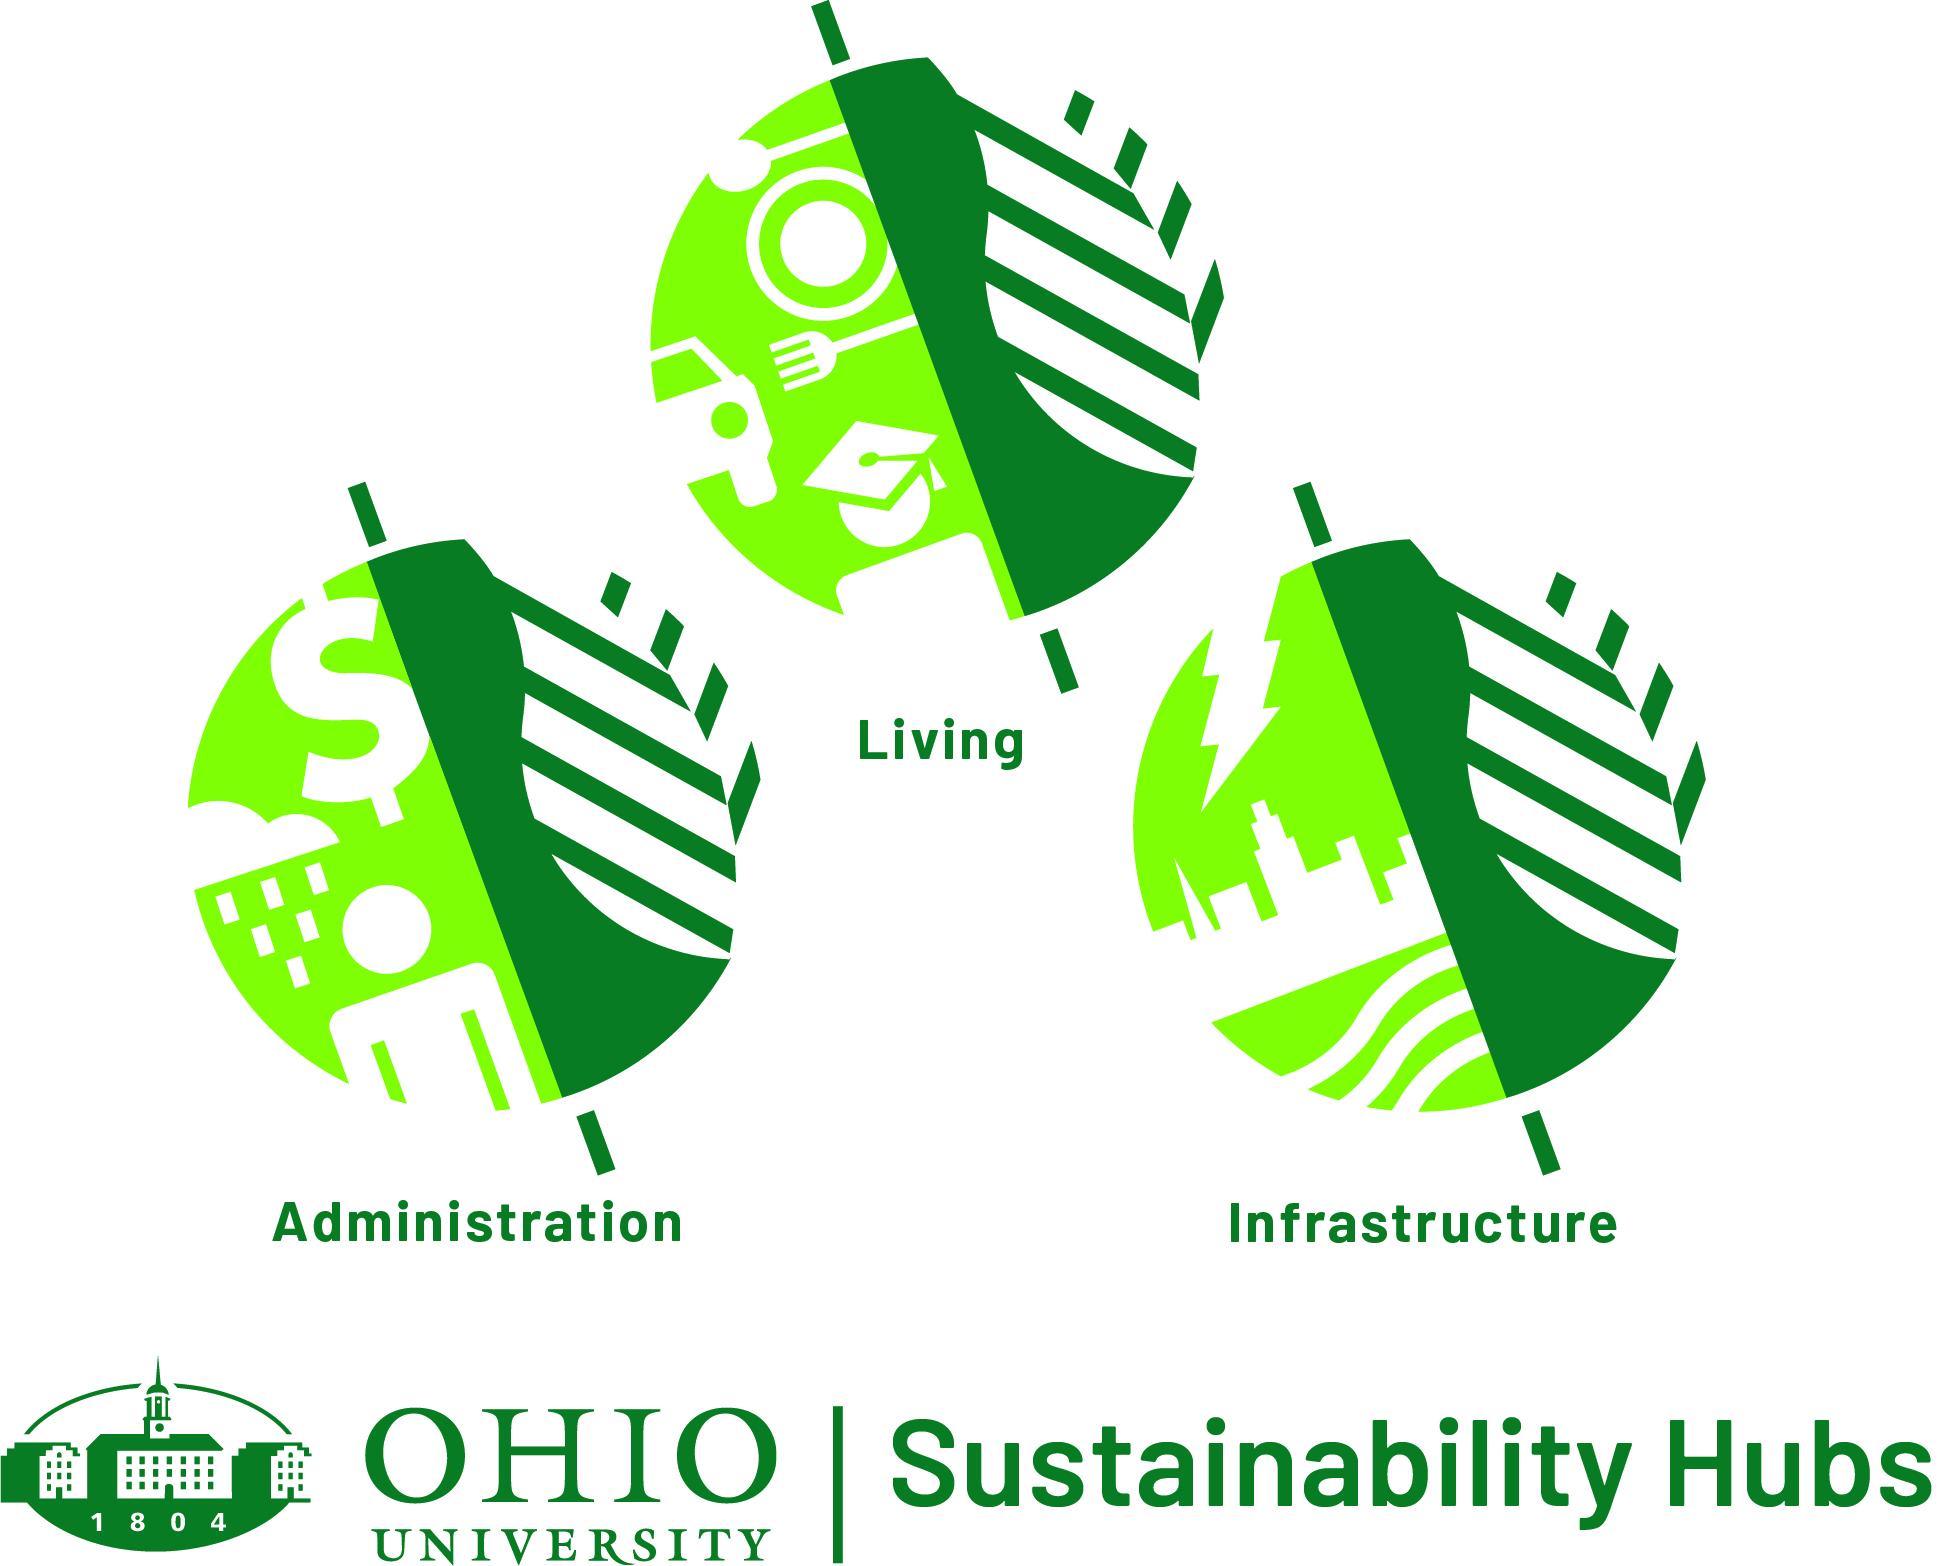 Structure of Sustainability Hubs at Ohio University